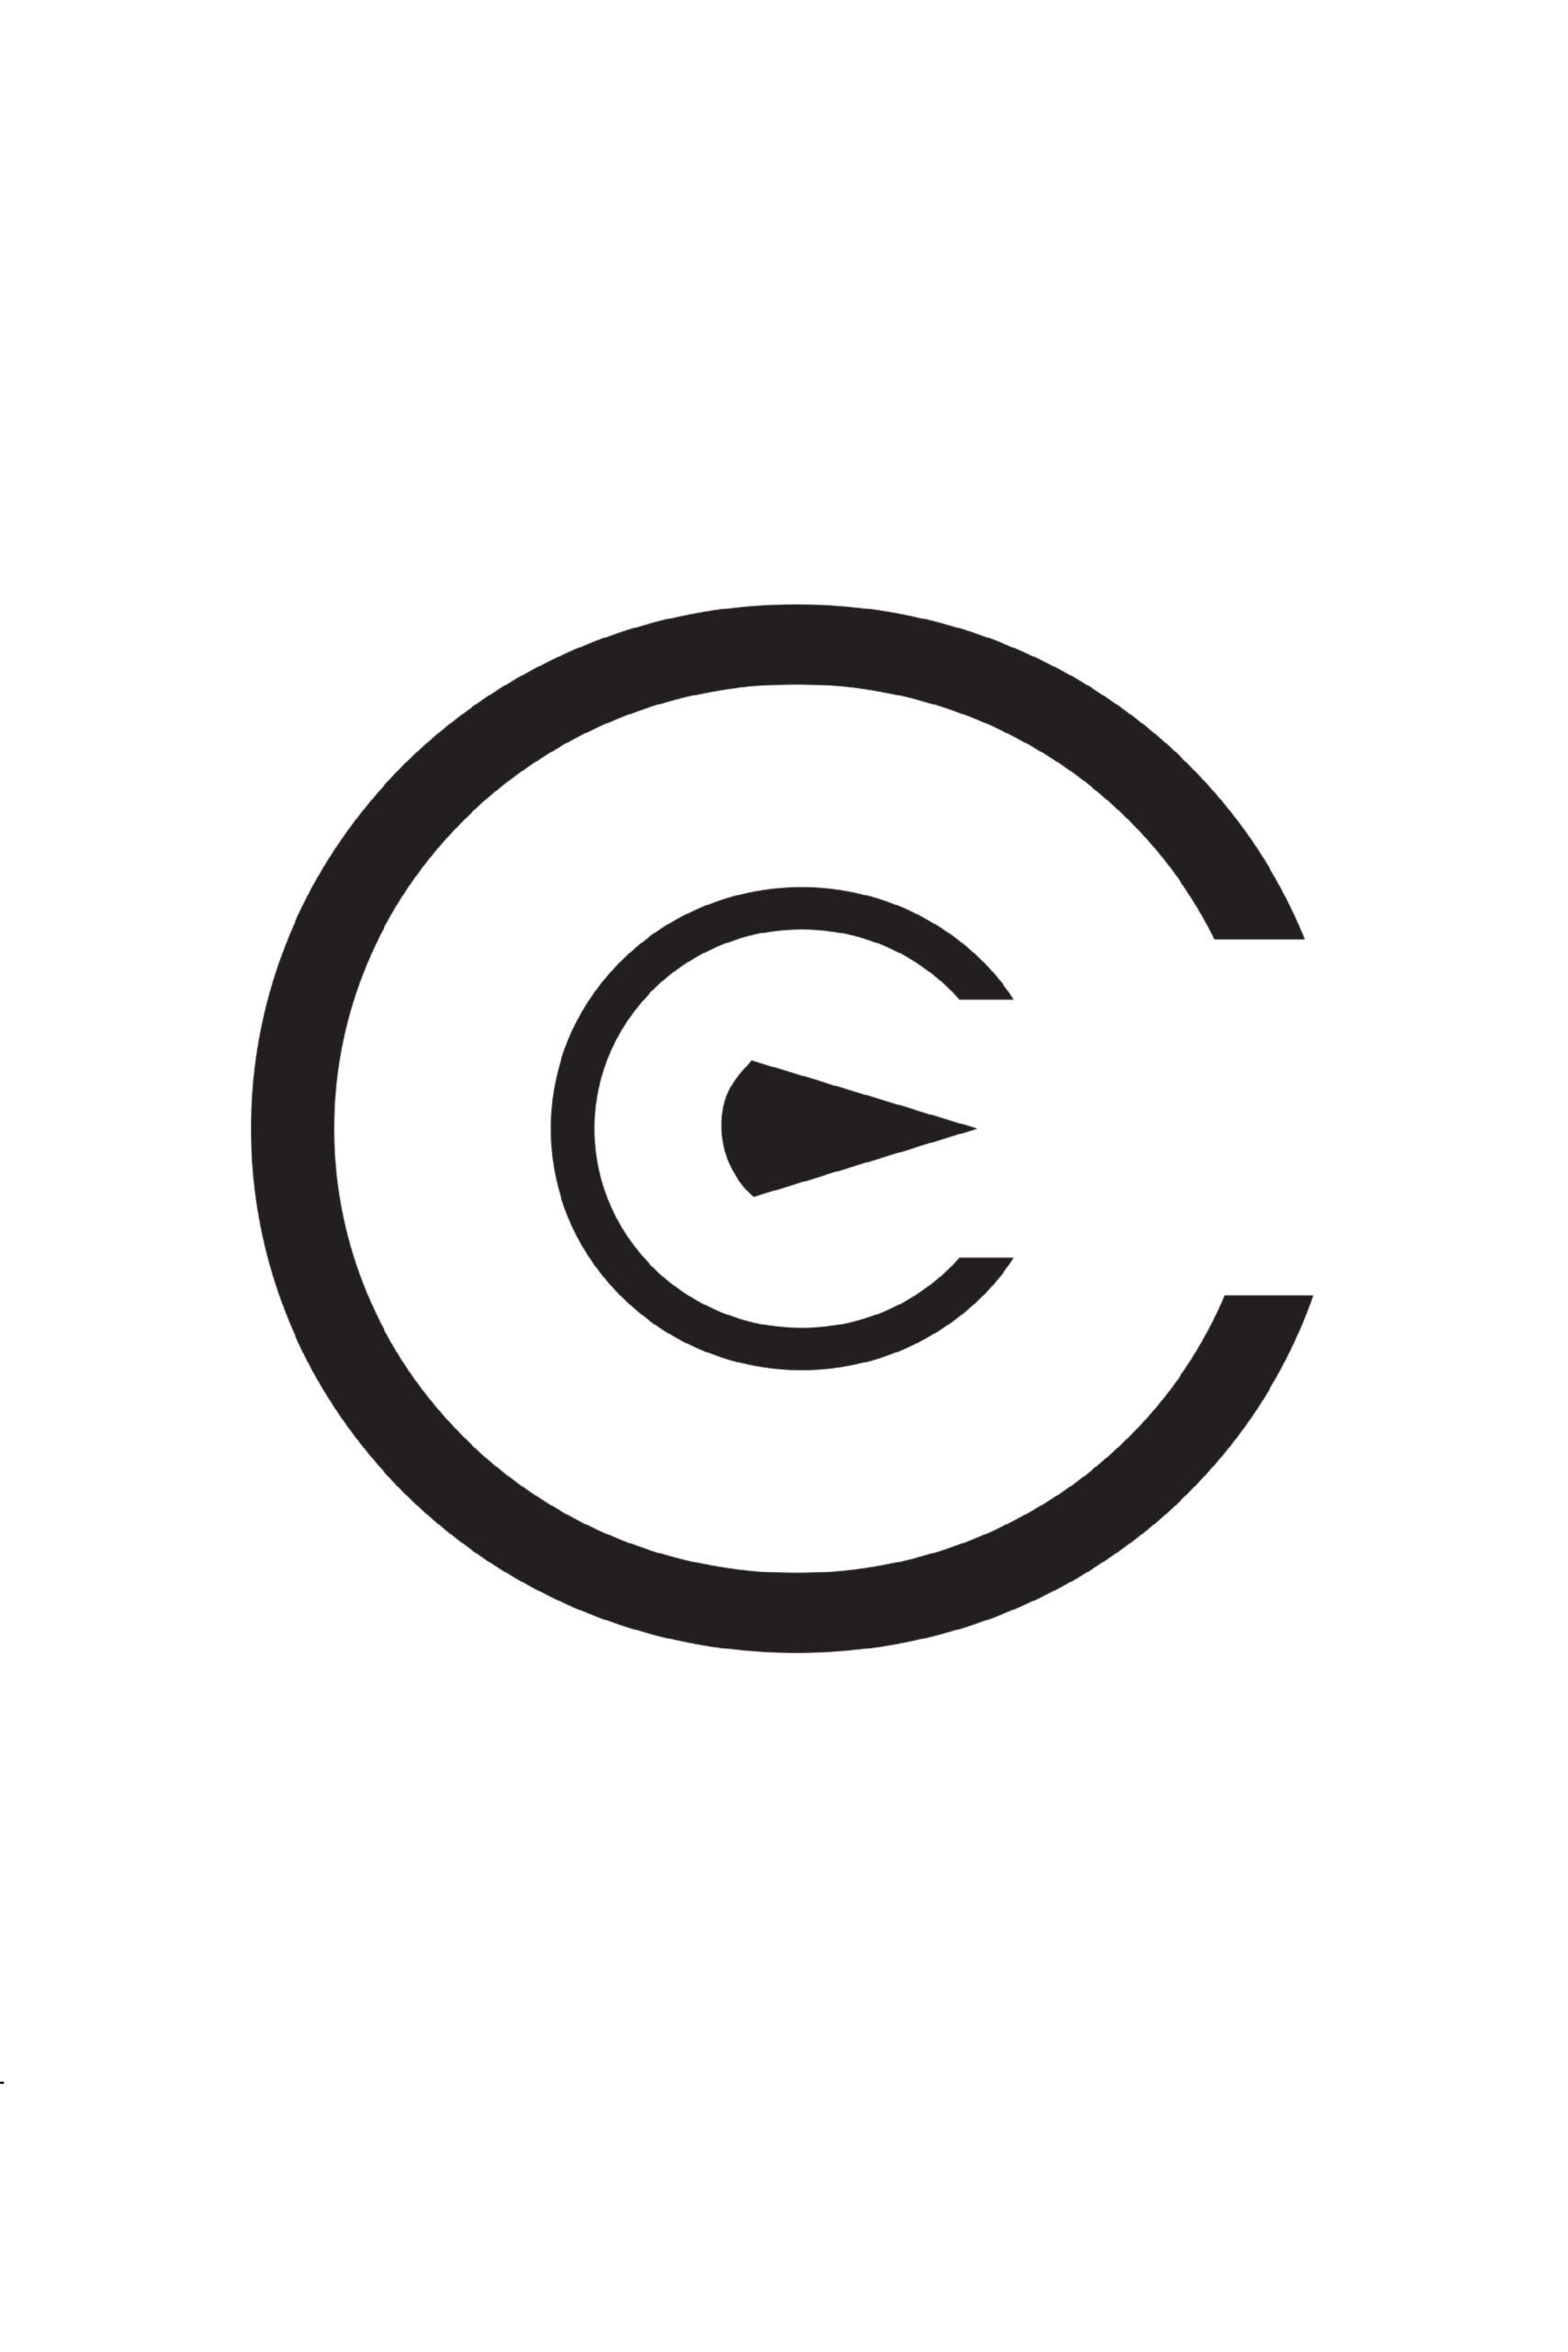 Crestone Air Partners logo icon color